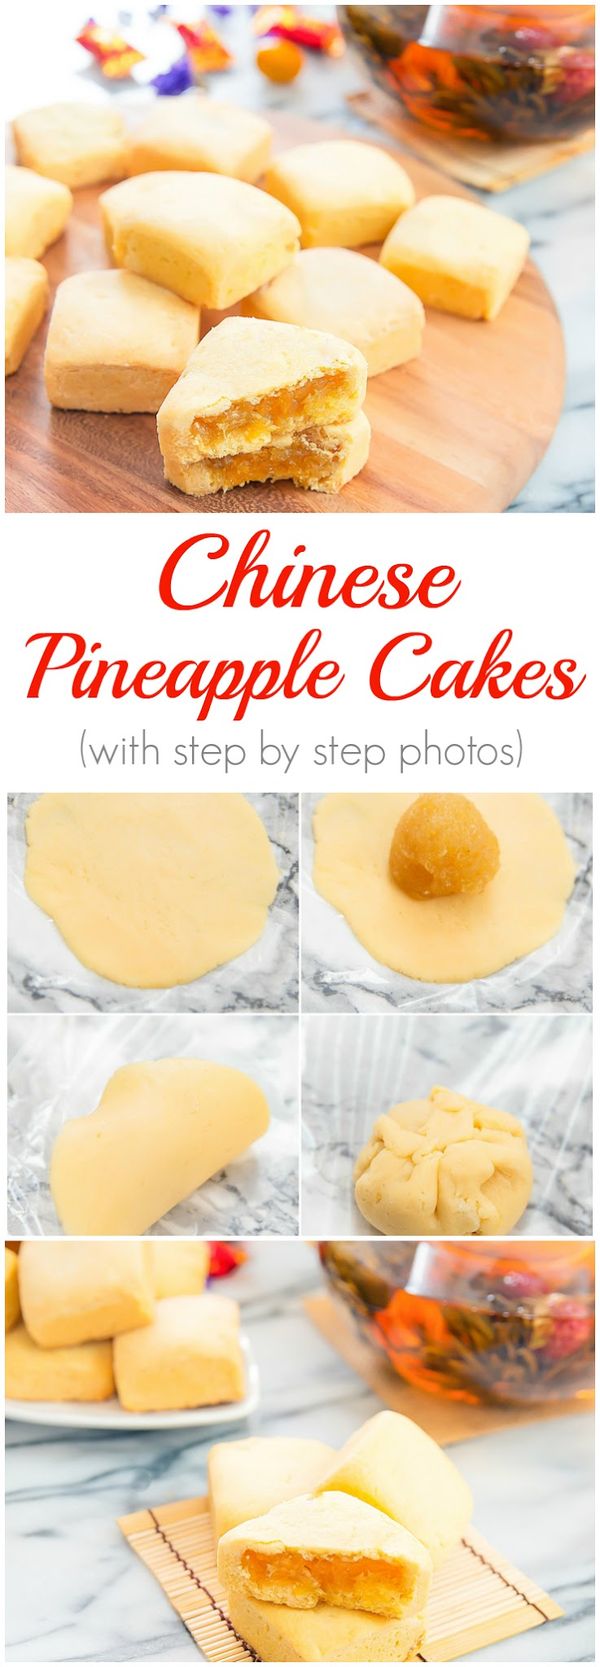 Chinese/Taiwanese Pineapple Cakes